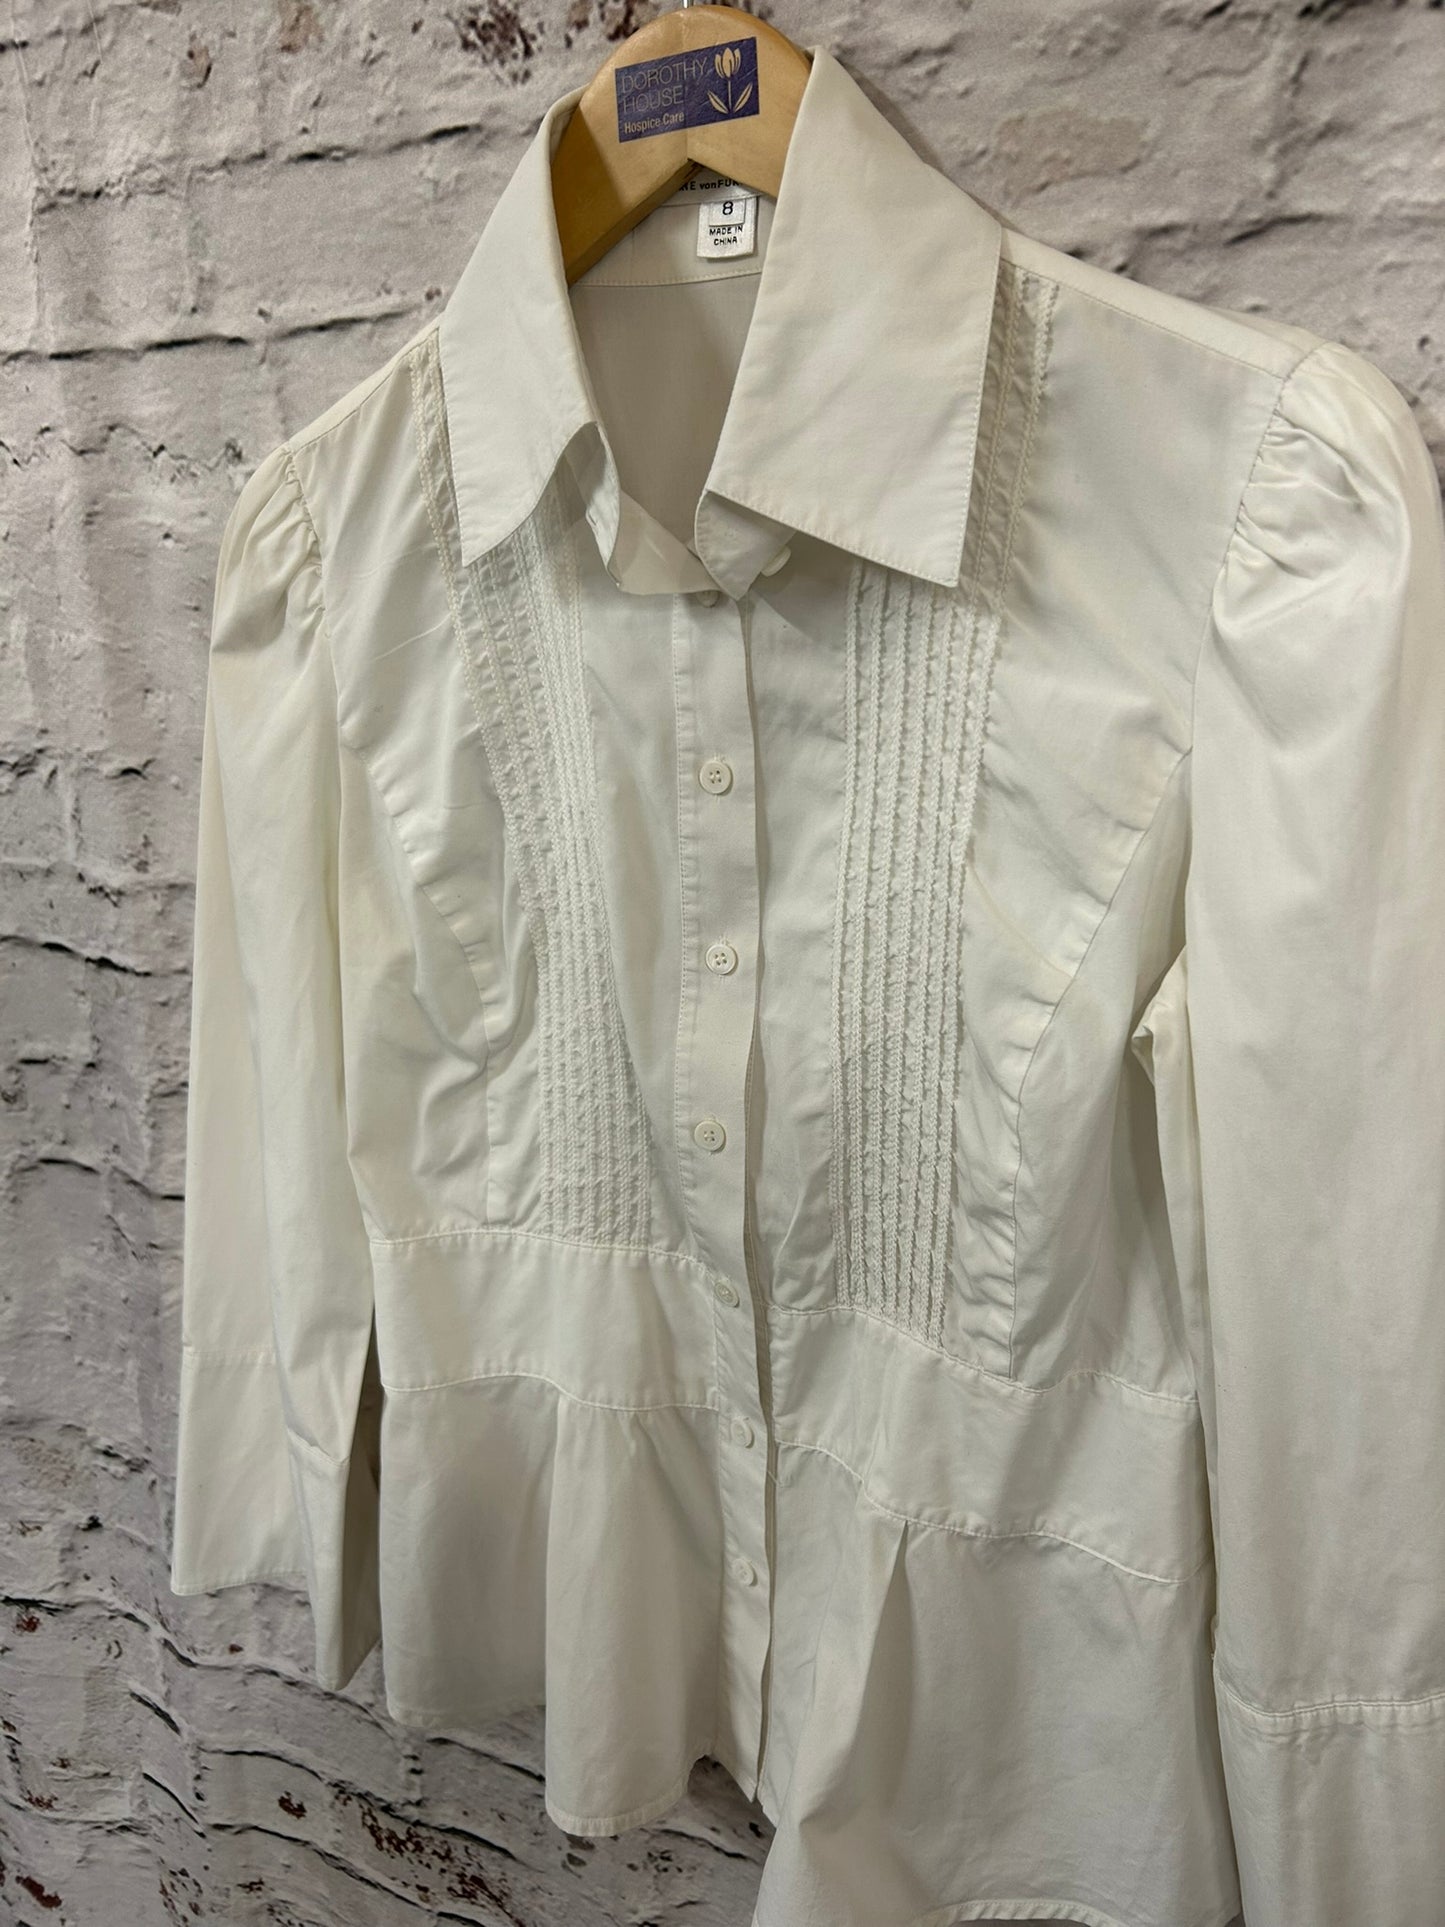 Designer 1990s Style White Shirt Size 10-12